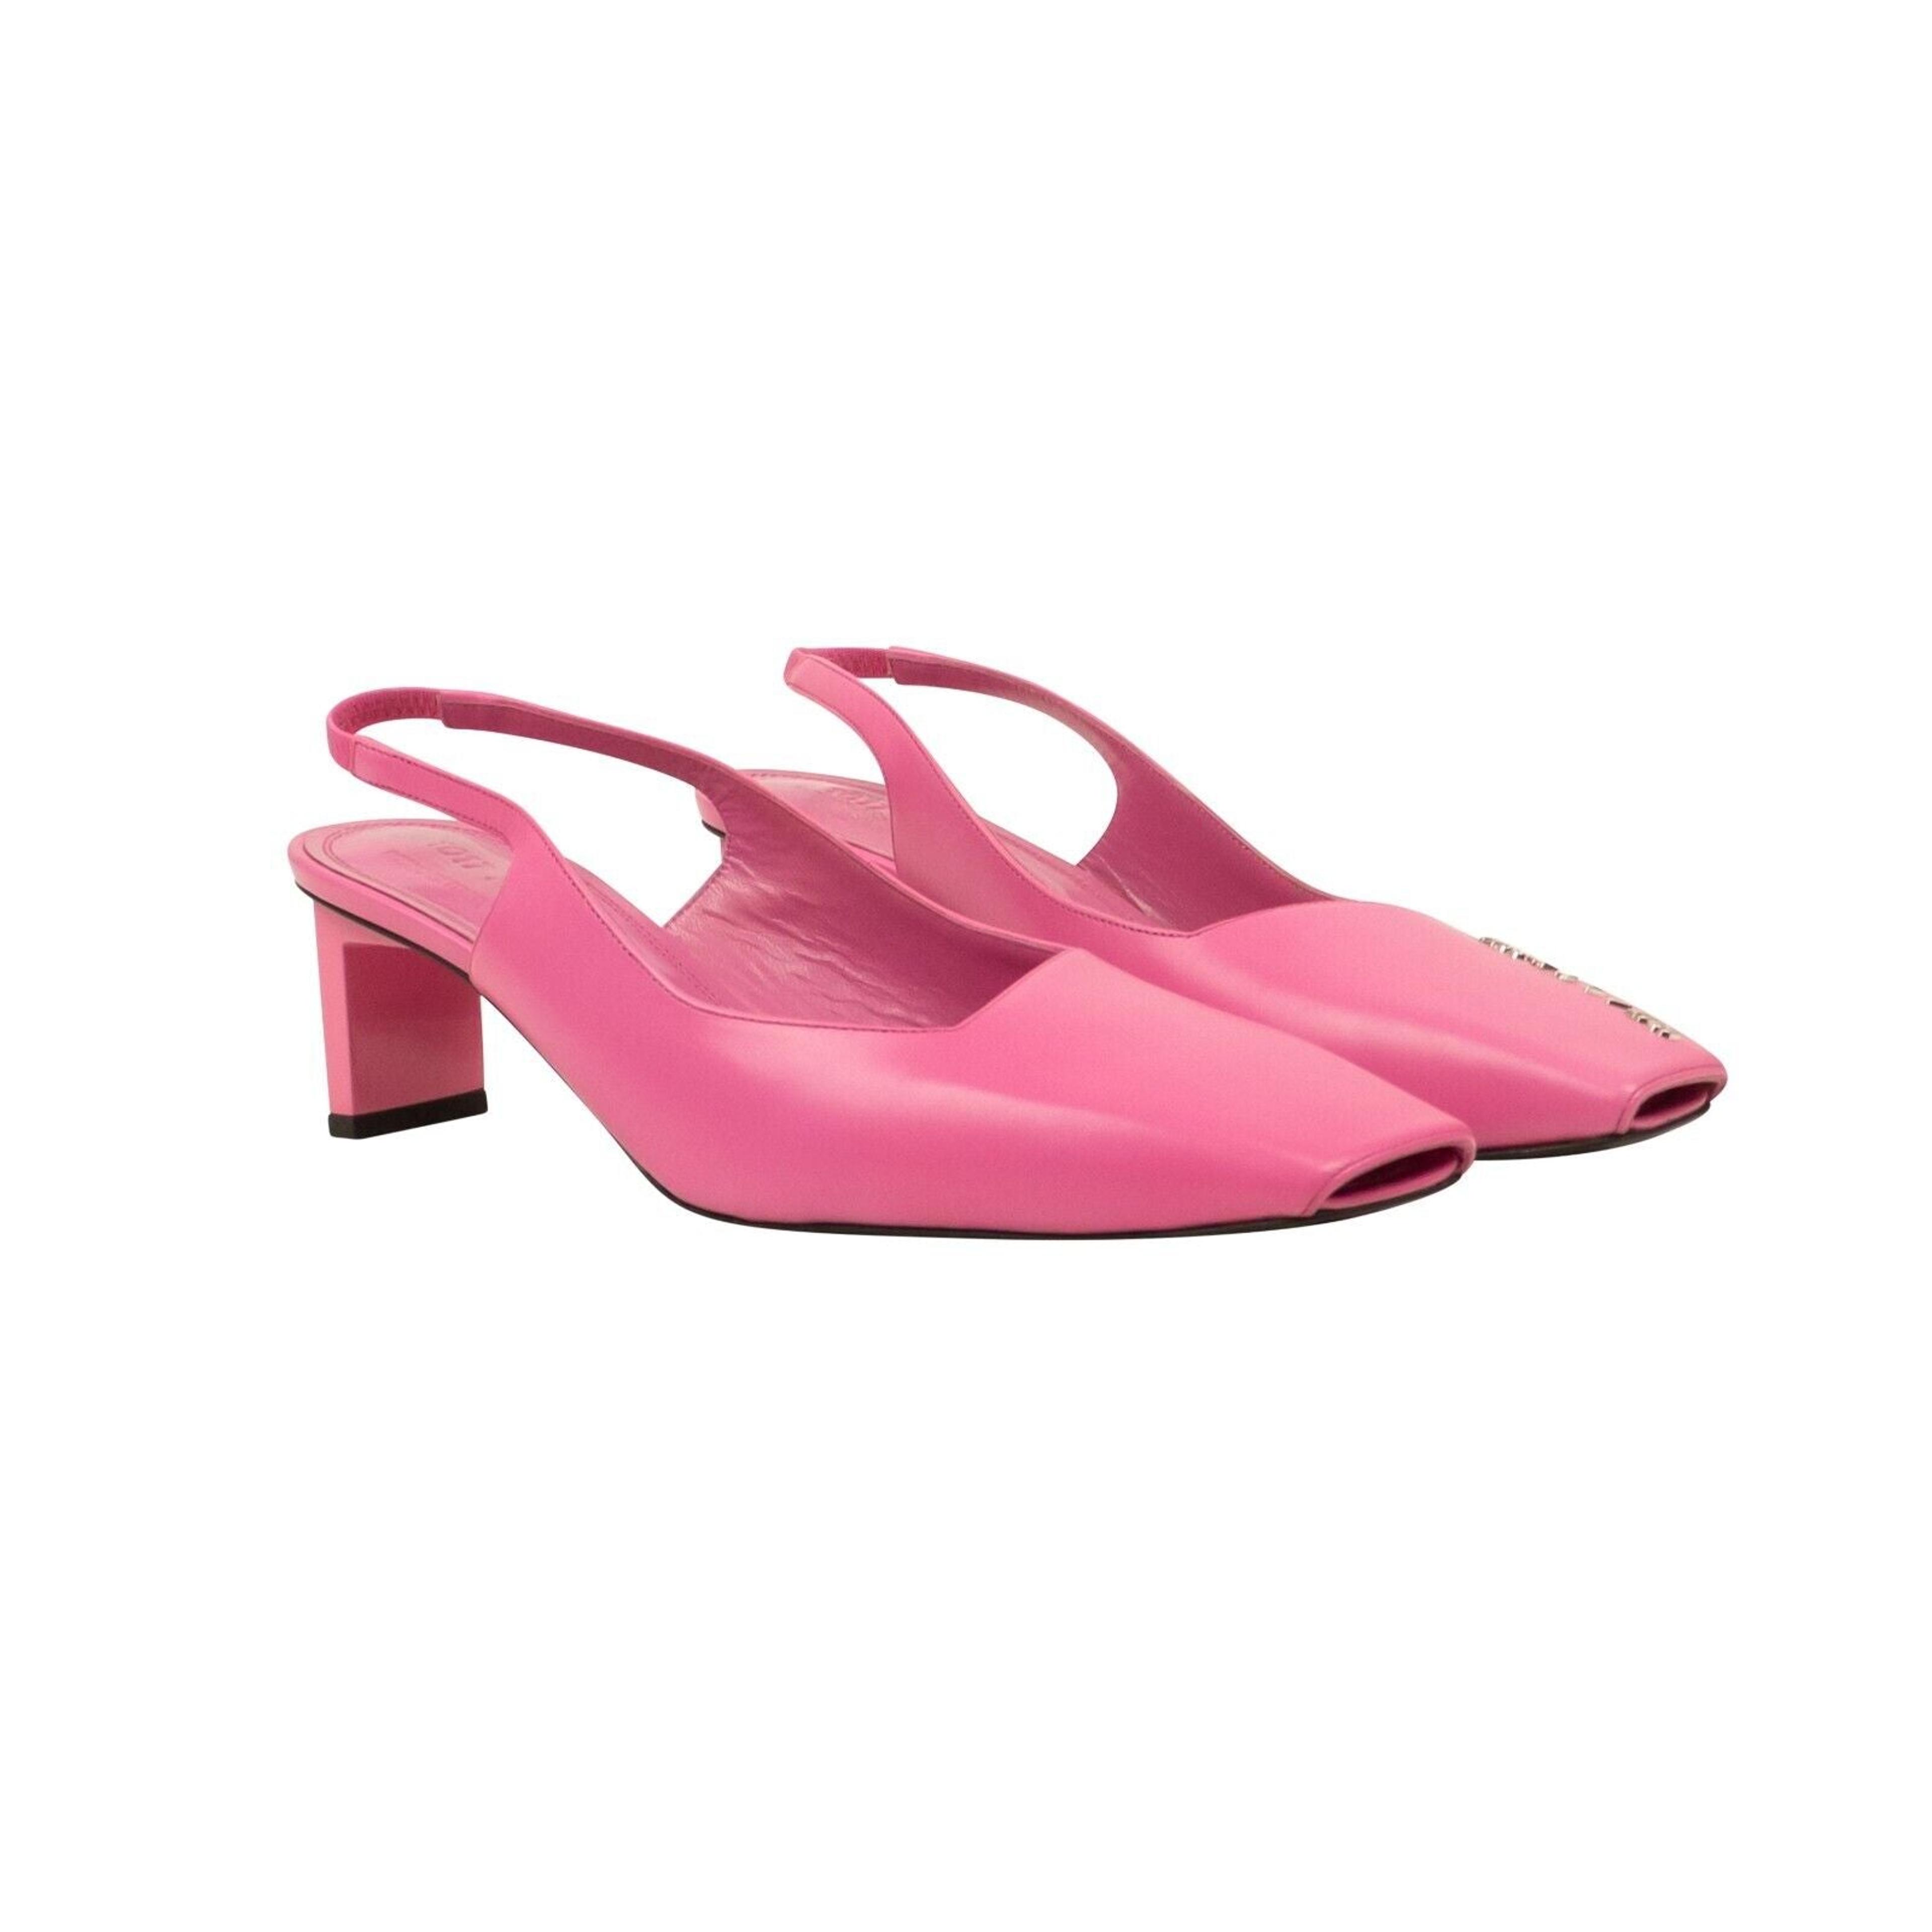 Alternate View 2 of Pink BETTA Leather Slingback Pump Heels